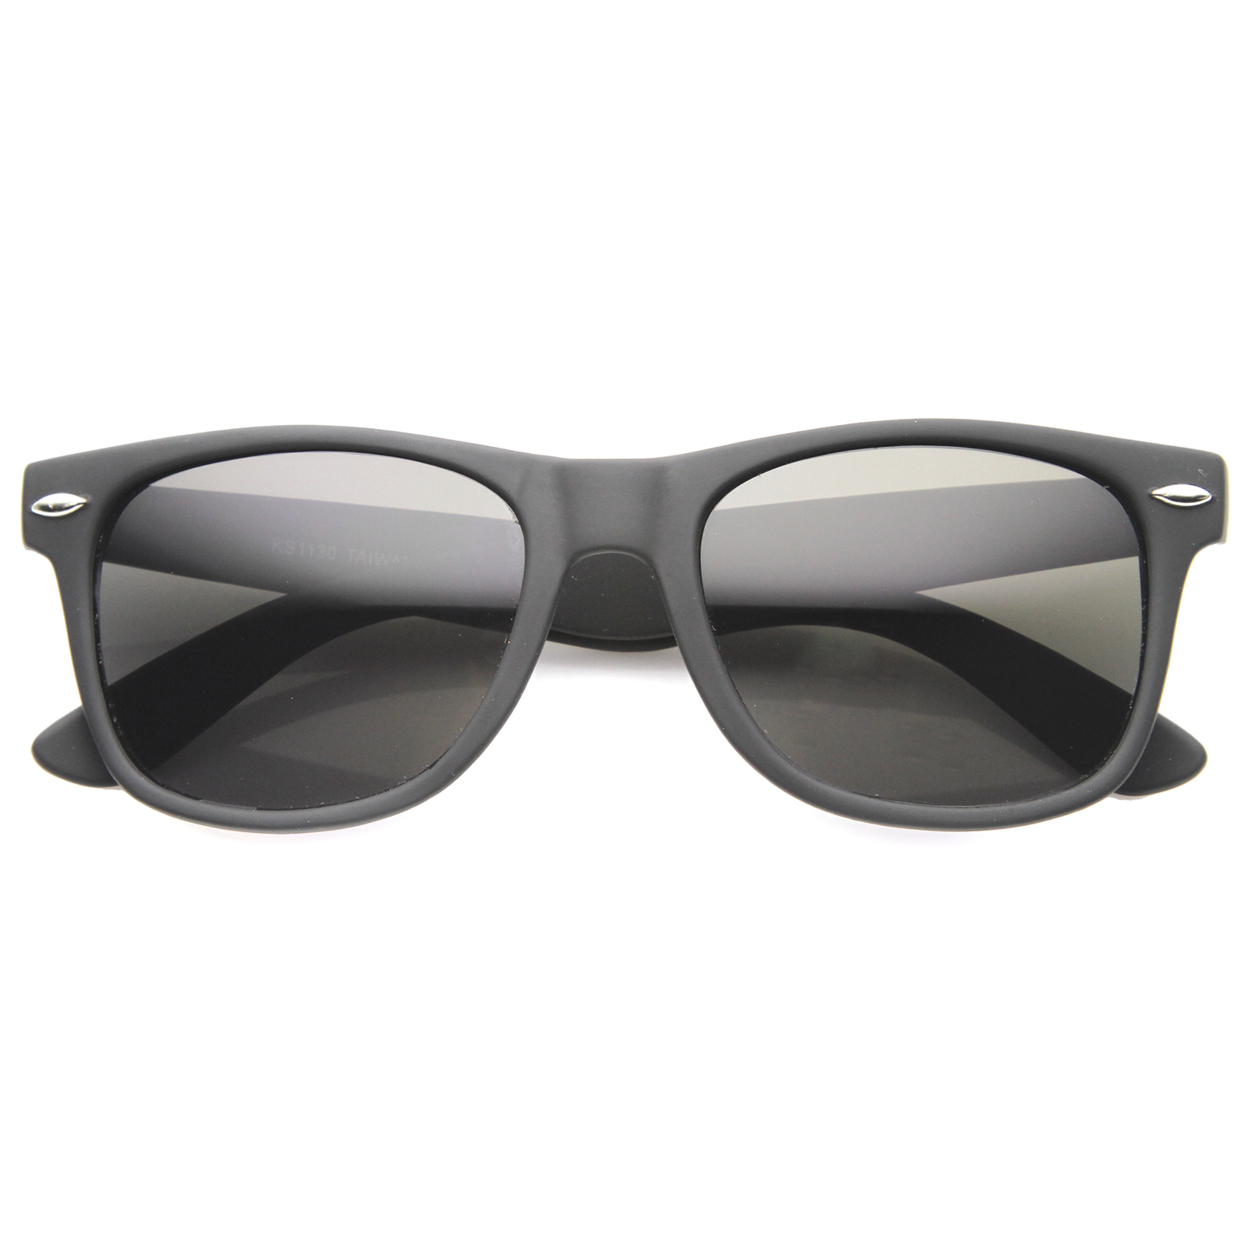 Mens Horn Rimmed Sunglasses With UV400 Protected Composite Lens 9933 - Tortoise / Smoke